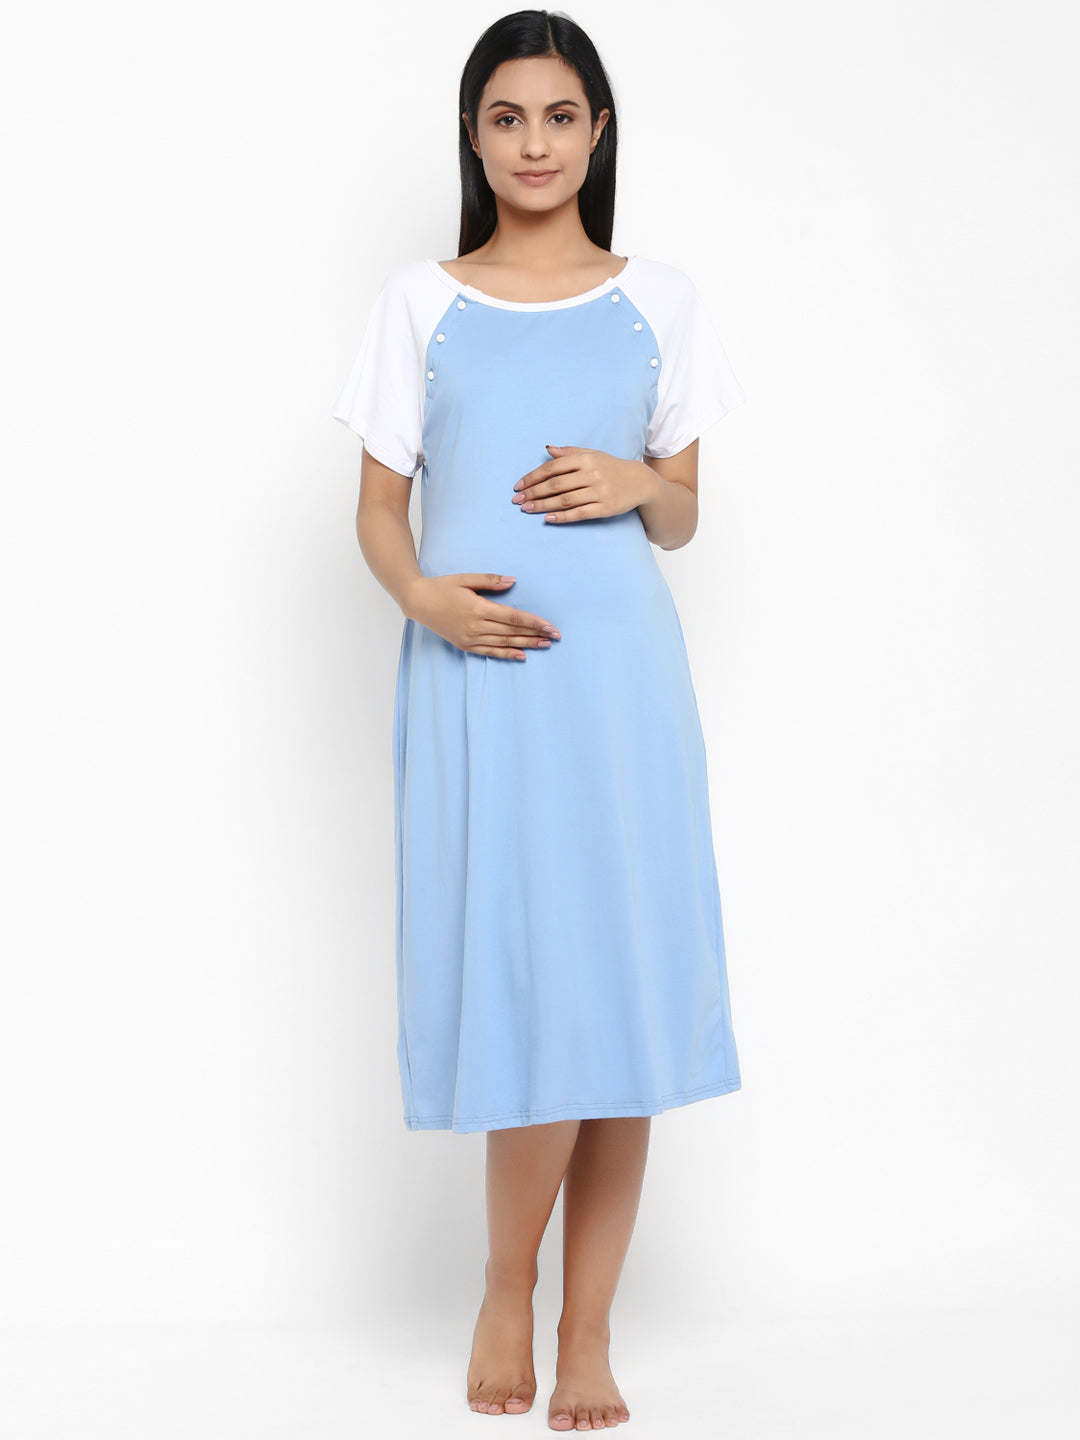 Maternity Nursing Hospital Gown - 2 in 1